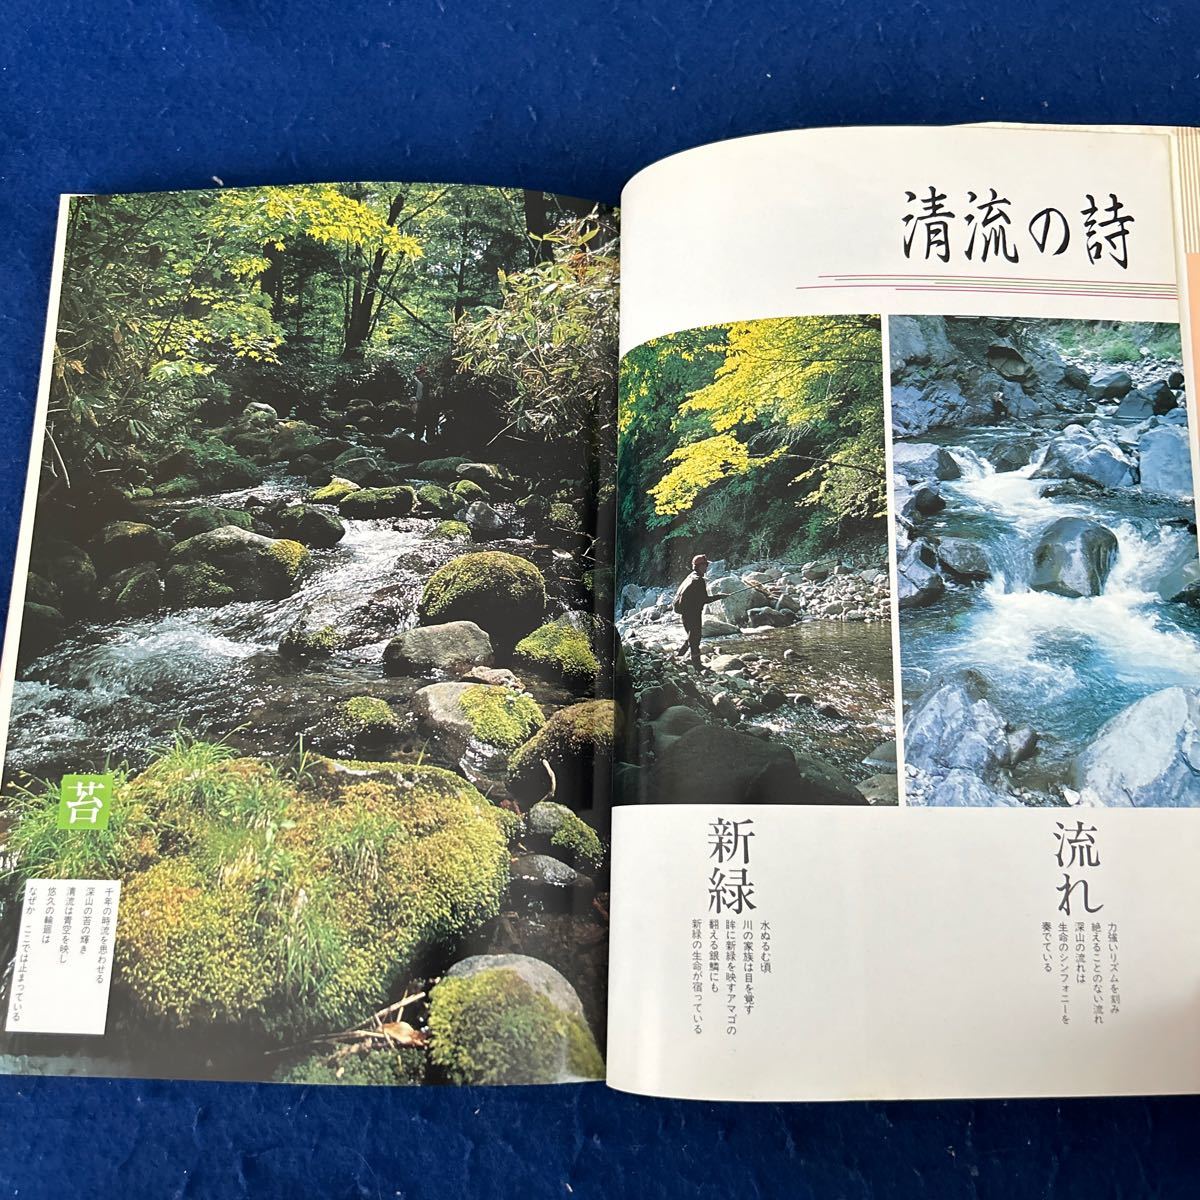 .. рыбалка . река. .6* Chuubu сборник 1* Shizuoka * Aichi * Gifu * Fukui * рыбалка * рыбалка *. гид 